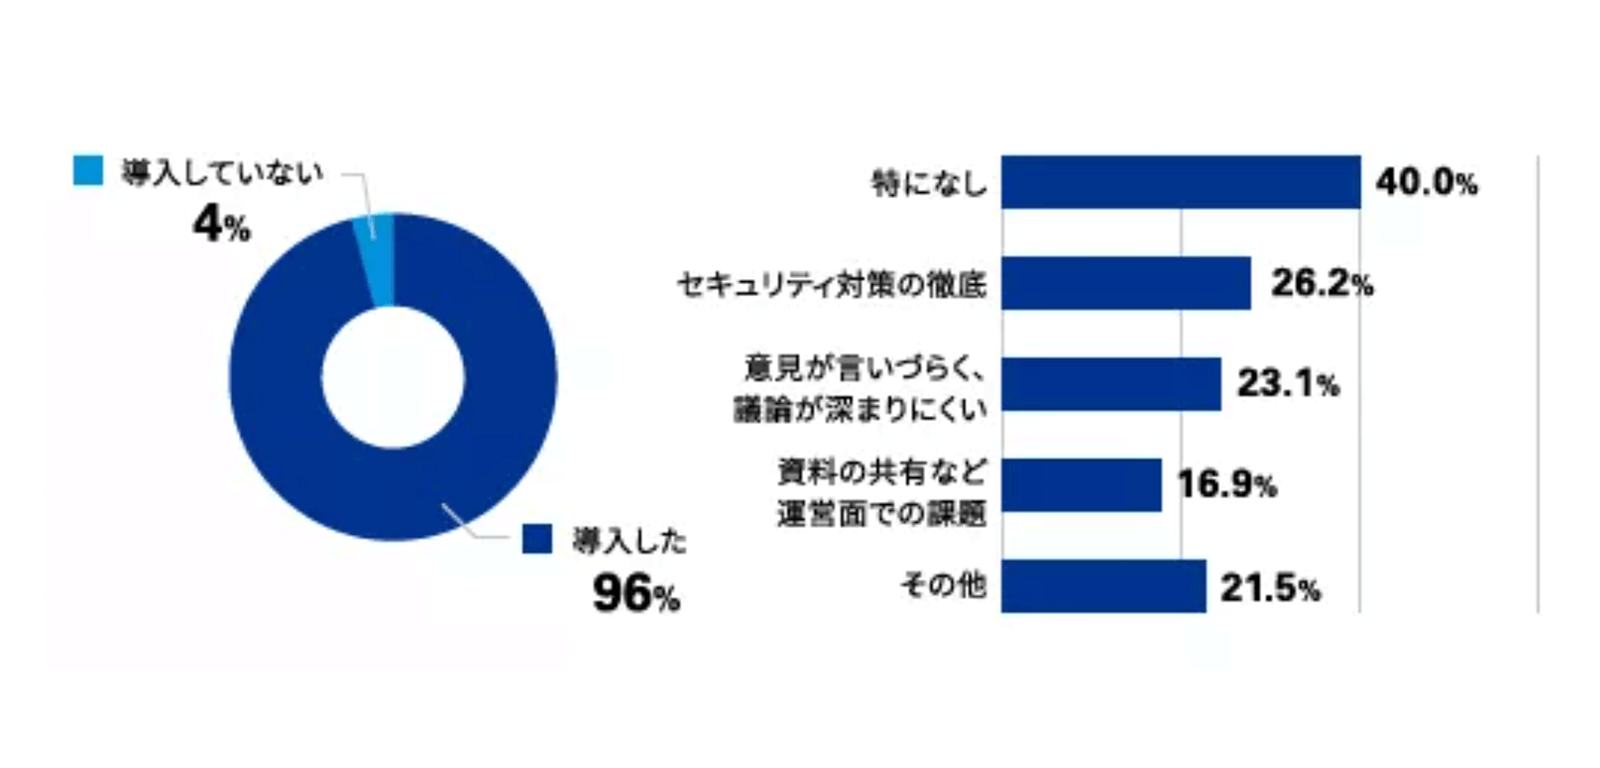 https://home.kpmg/jp/ja/home/insights/2020/12/corporate-governance-board-covid-survey2020.html 2021年5月11日最終アクセス